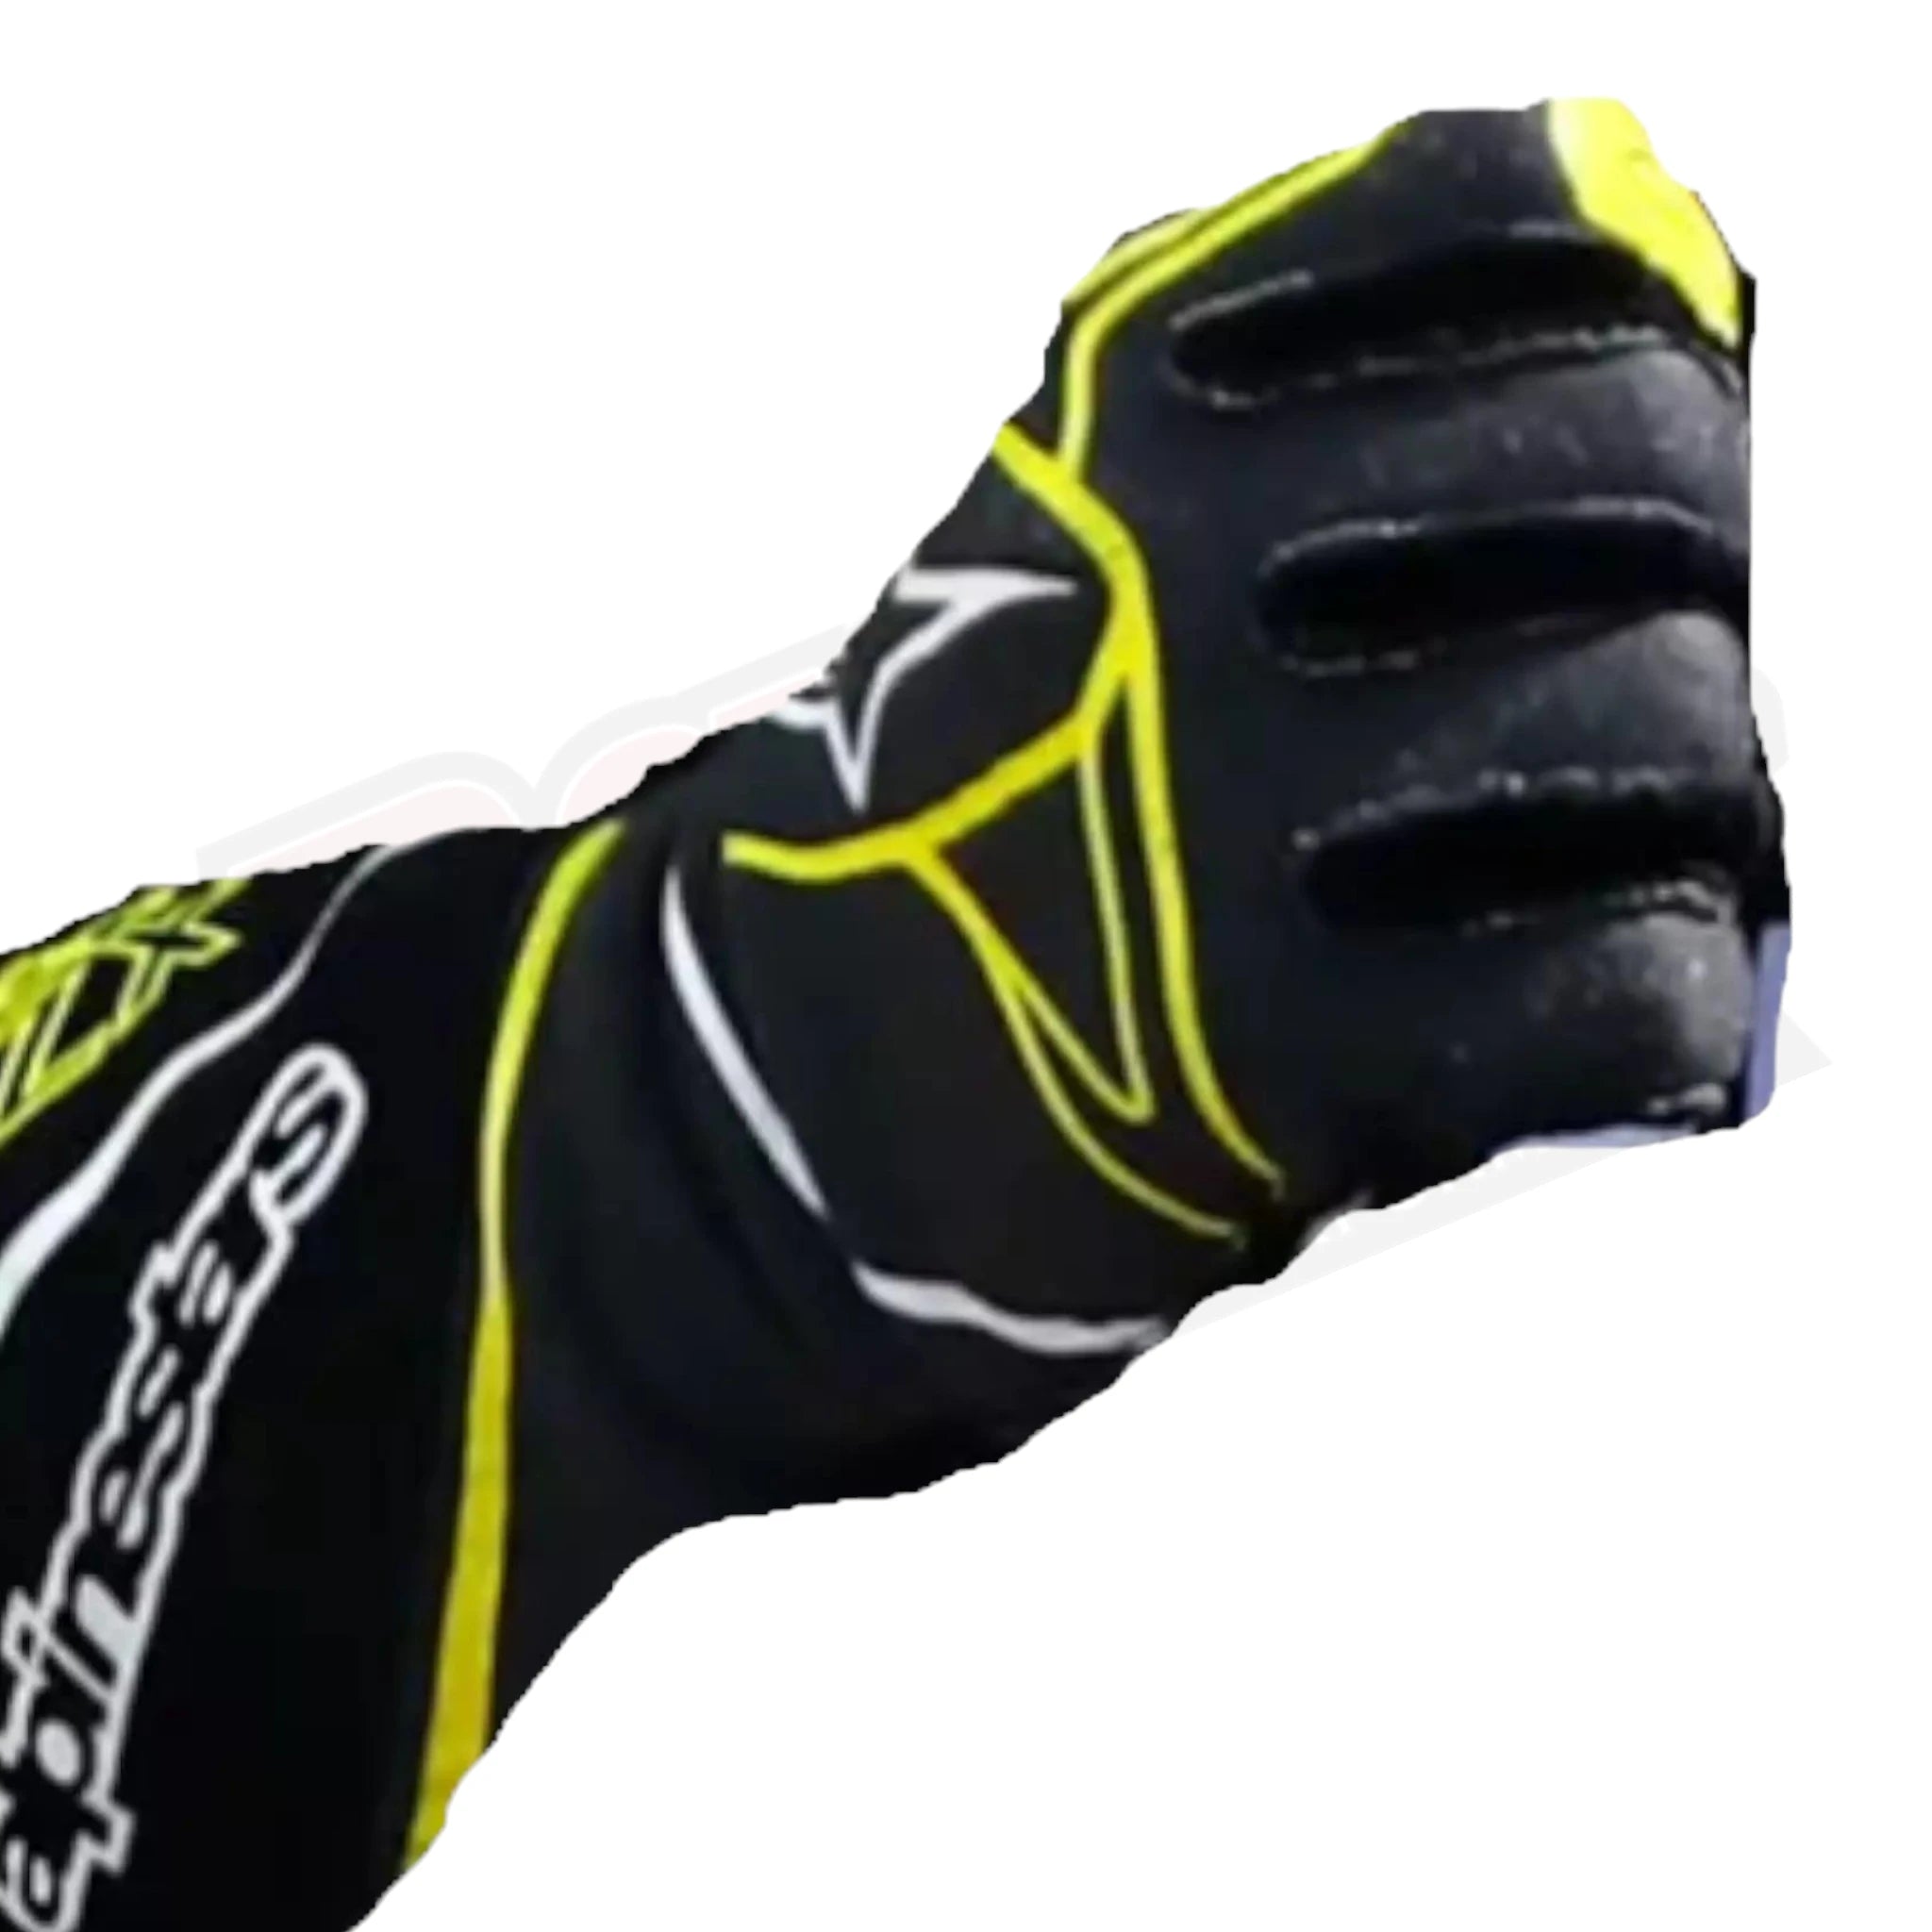 2020 Renault junior Oscar Piastri  F3 Gloves